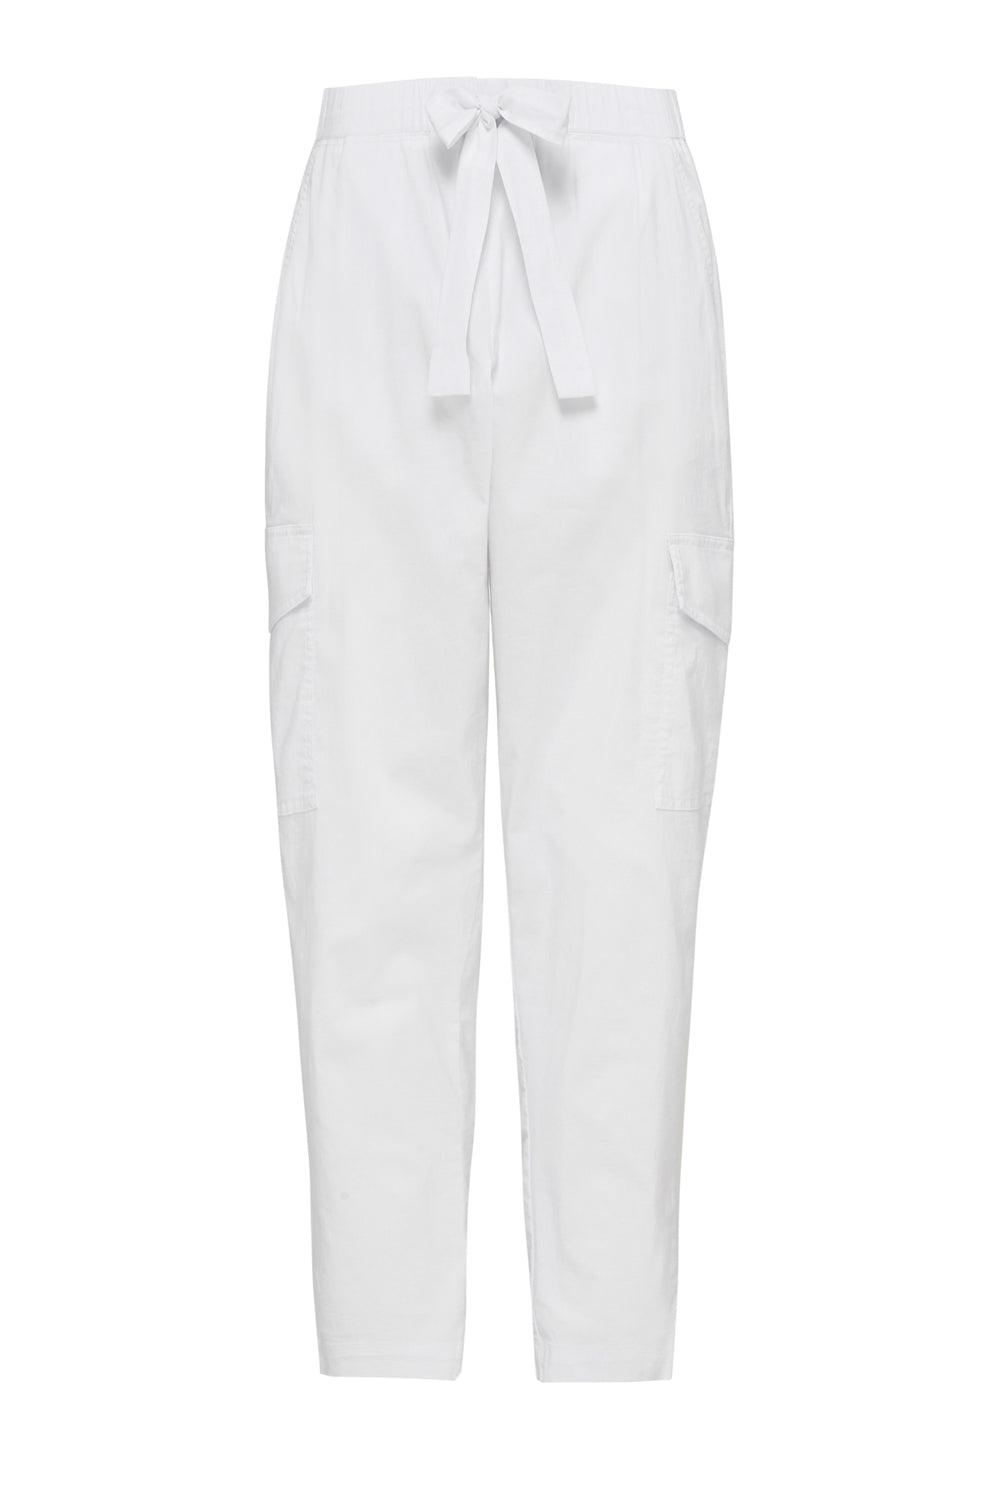 Acrobat Soft Cargo Pant - White - Pant VERGE